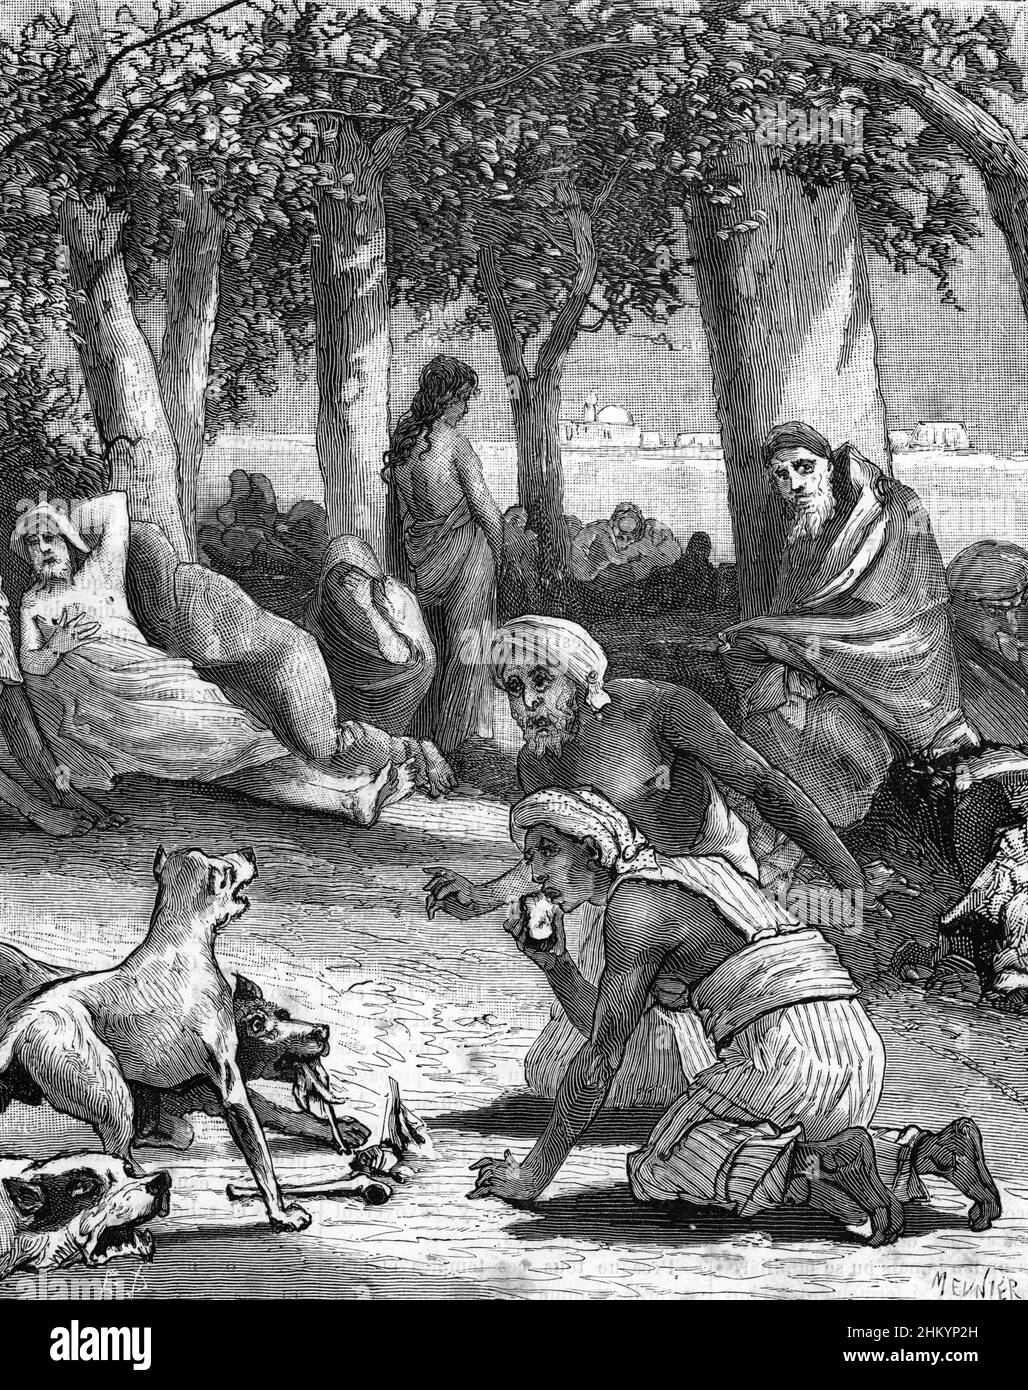 'Representation d'une leproserie en Inde' (Leprosy in India : a leper colony) Illustration tiree de 'La medecine populaire' 1881 Collection privee Stock Photo